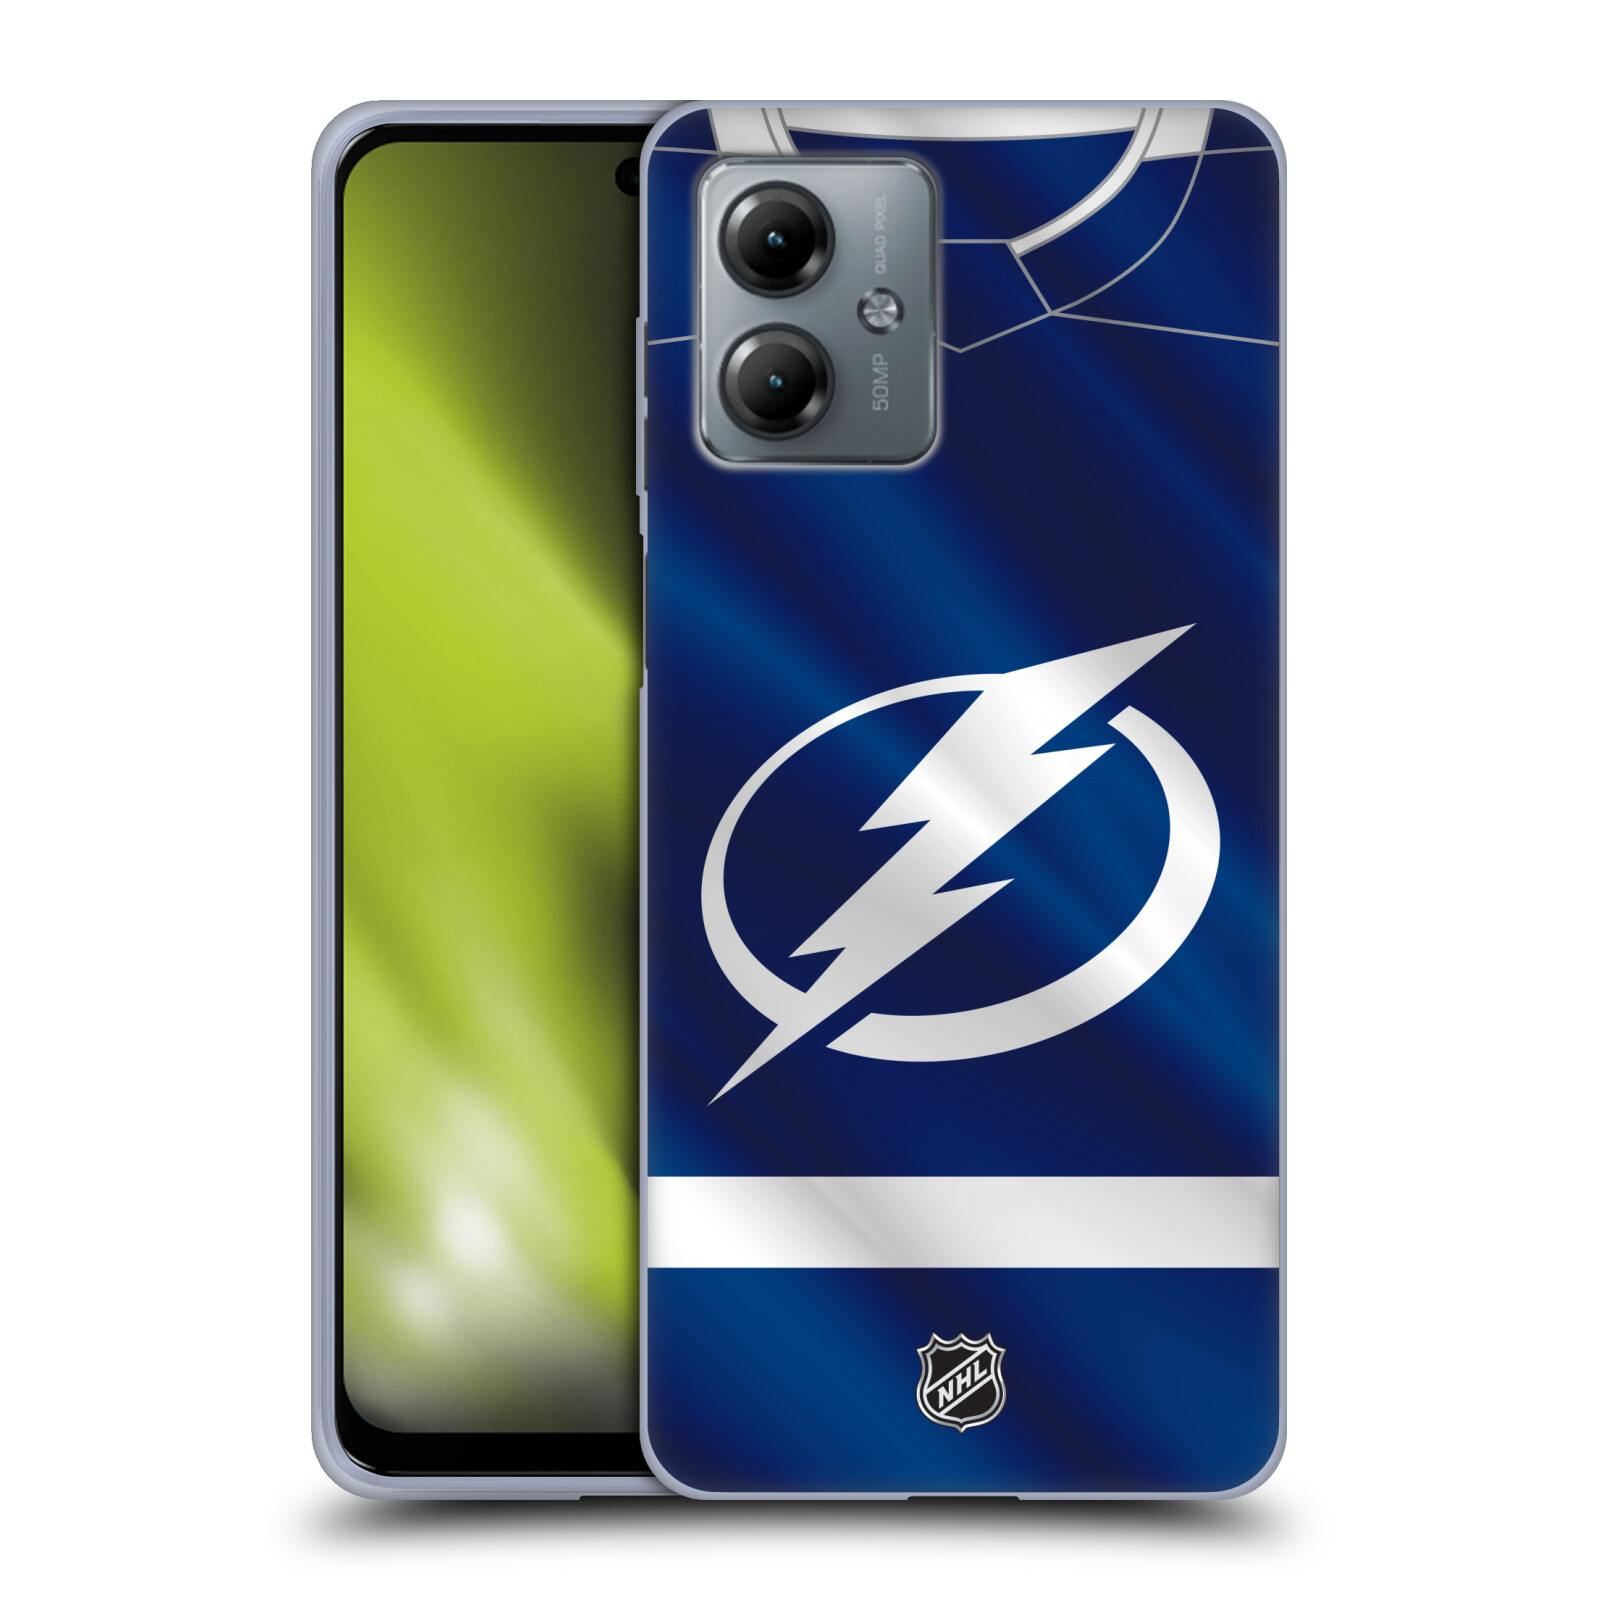 Silikonové pouzdro na mobil Motorola Moto G14 - NHL - Dres Tampa Bay Lightning (Silikonový kryt, obal, pouzdro na mobilní telefon Motorola Moto G14 s licencovaným motivem NHL - Dres Tampa Bay Lightning)